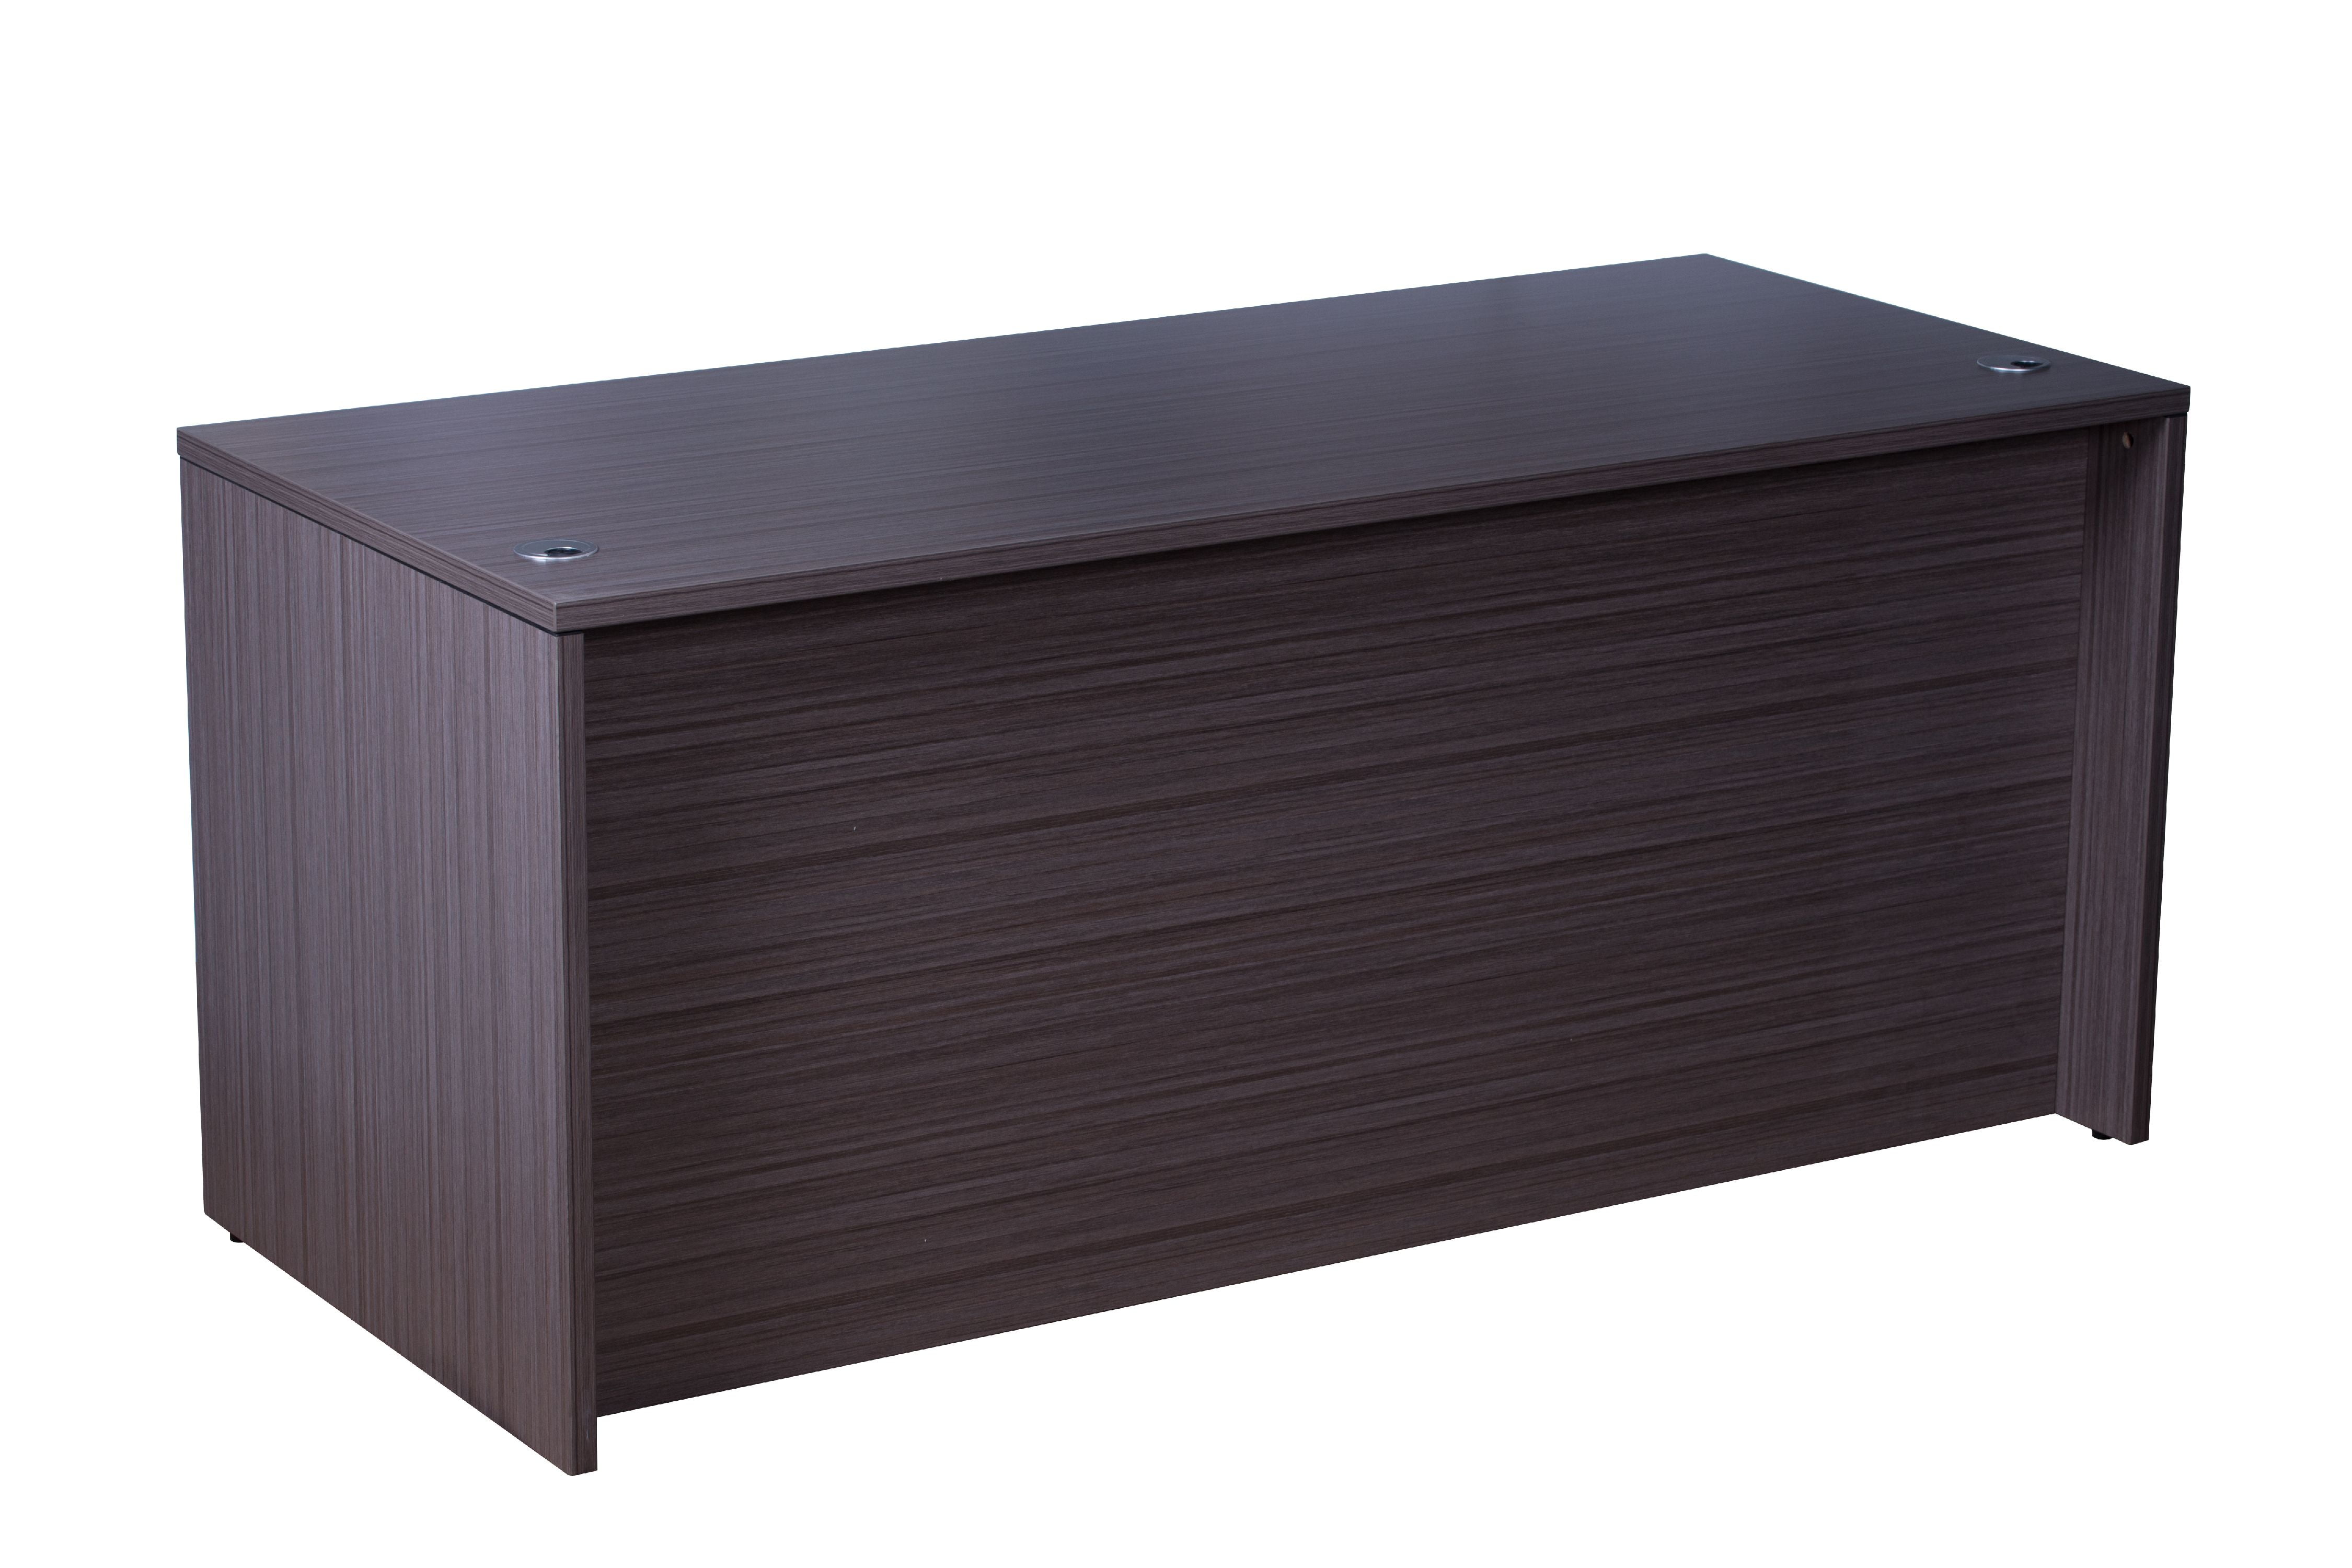 N102-dw Desk Shell, 66 W X 30 D In. - Driftwood